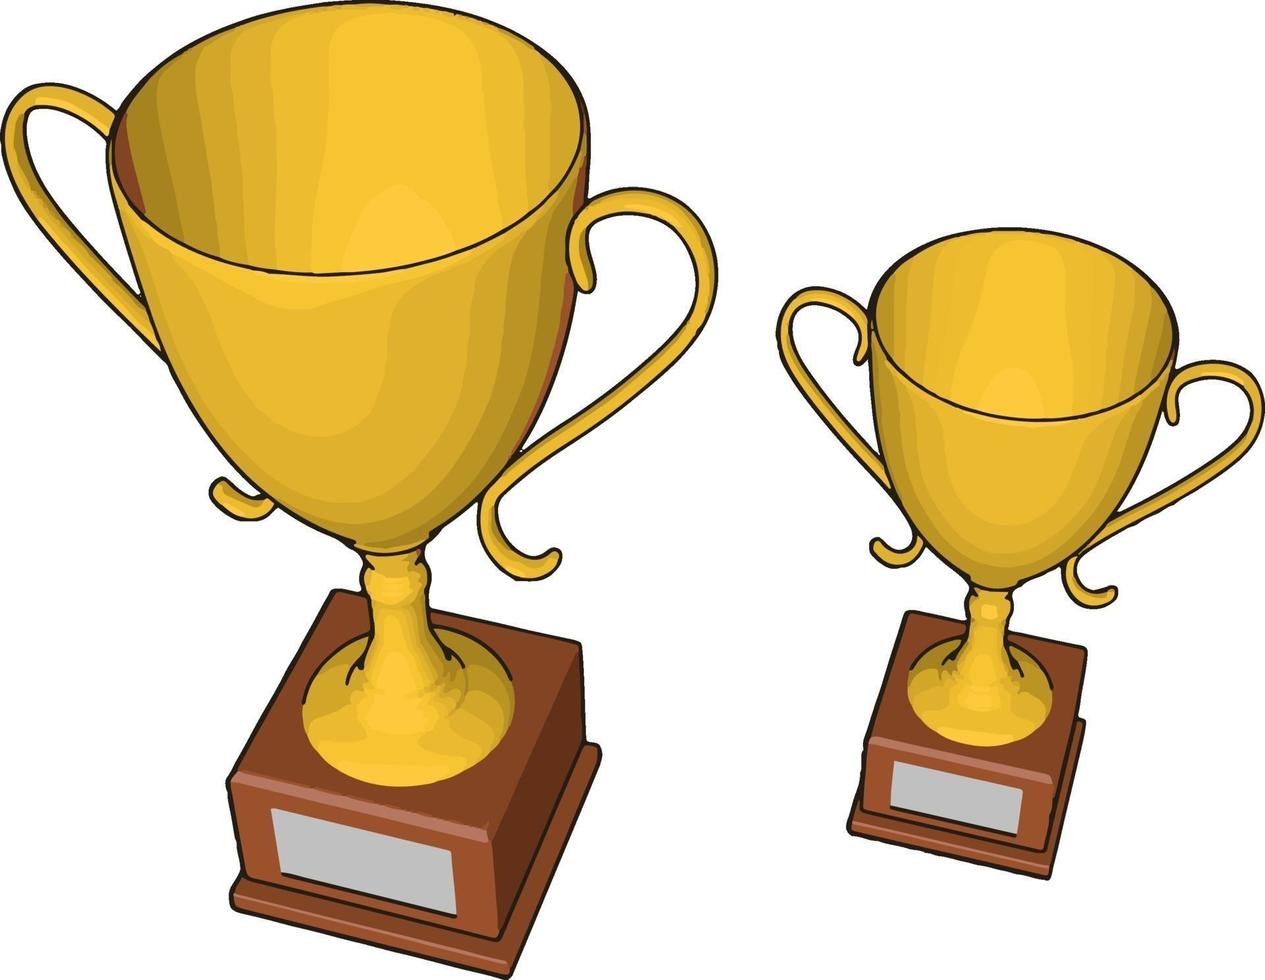 Golden trophy, illustration, vector on white background.